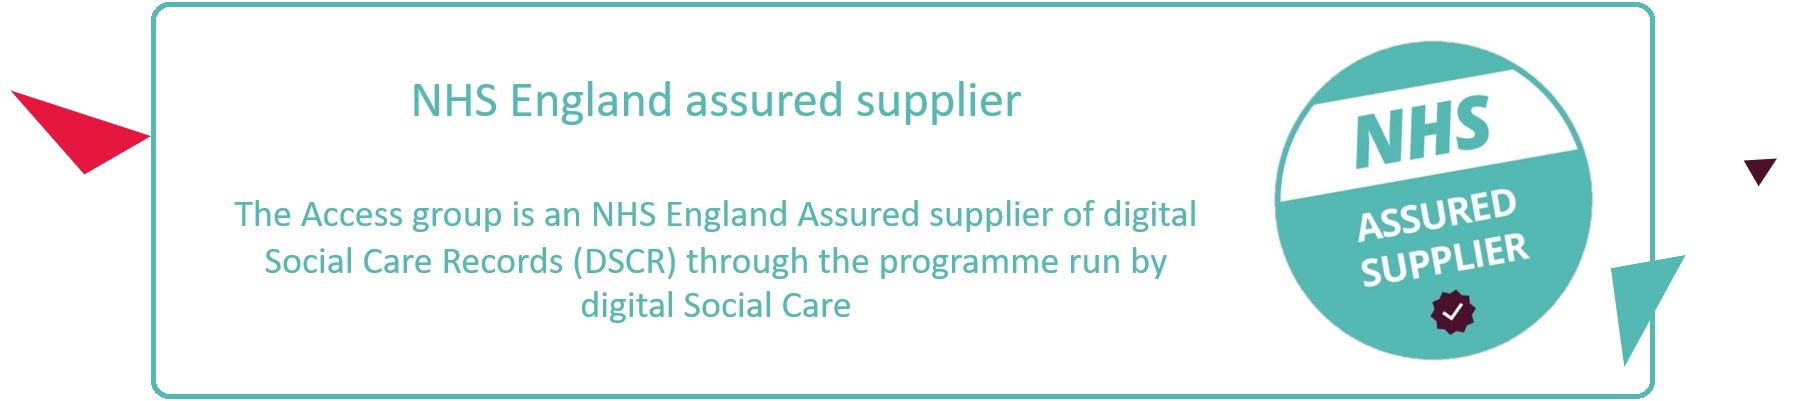 NHS assured supplier